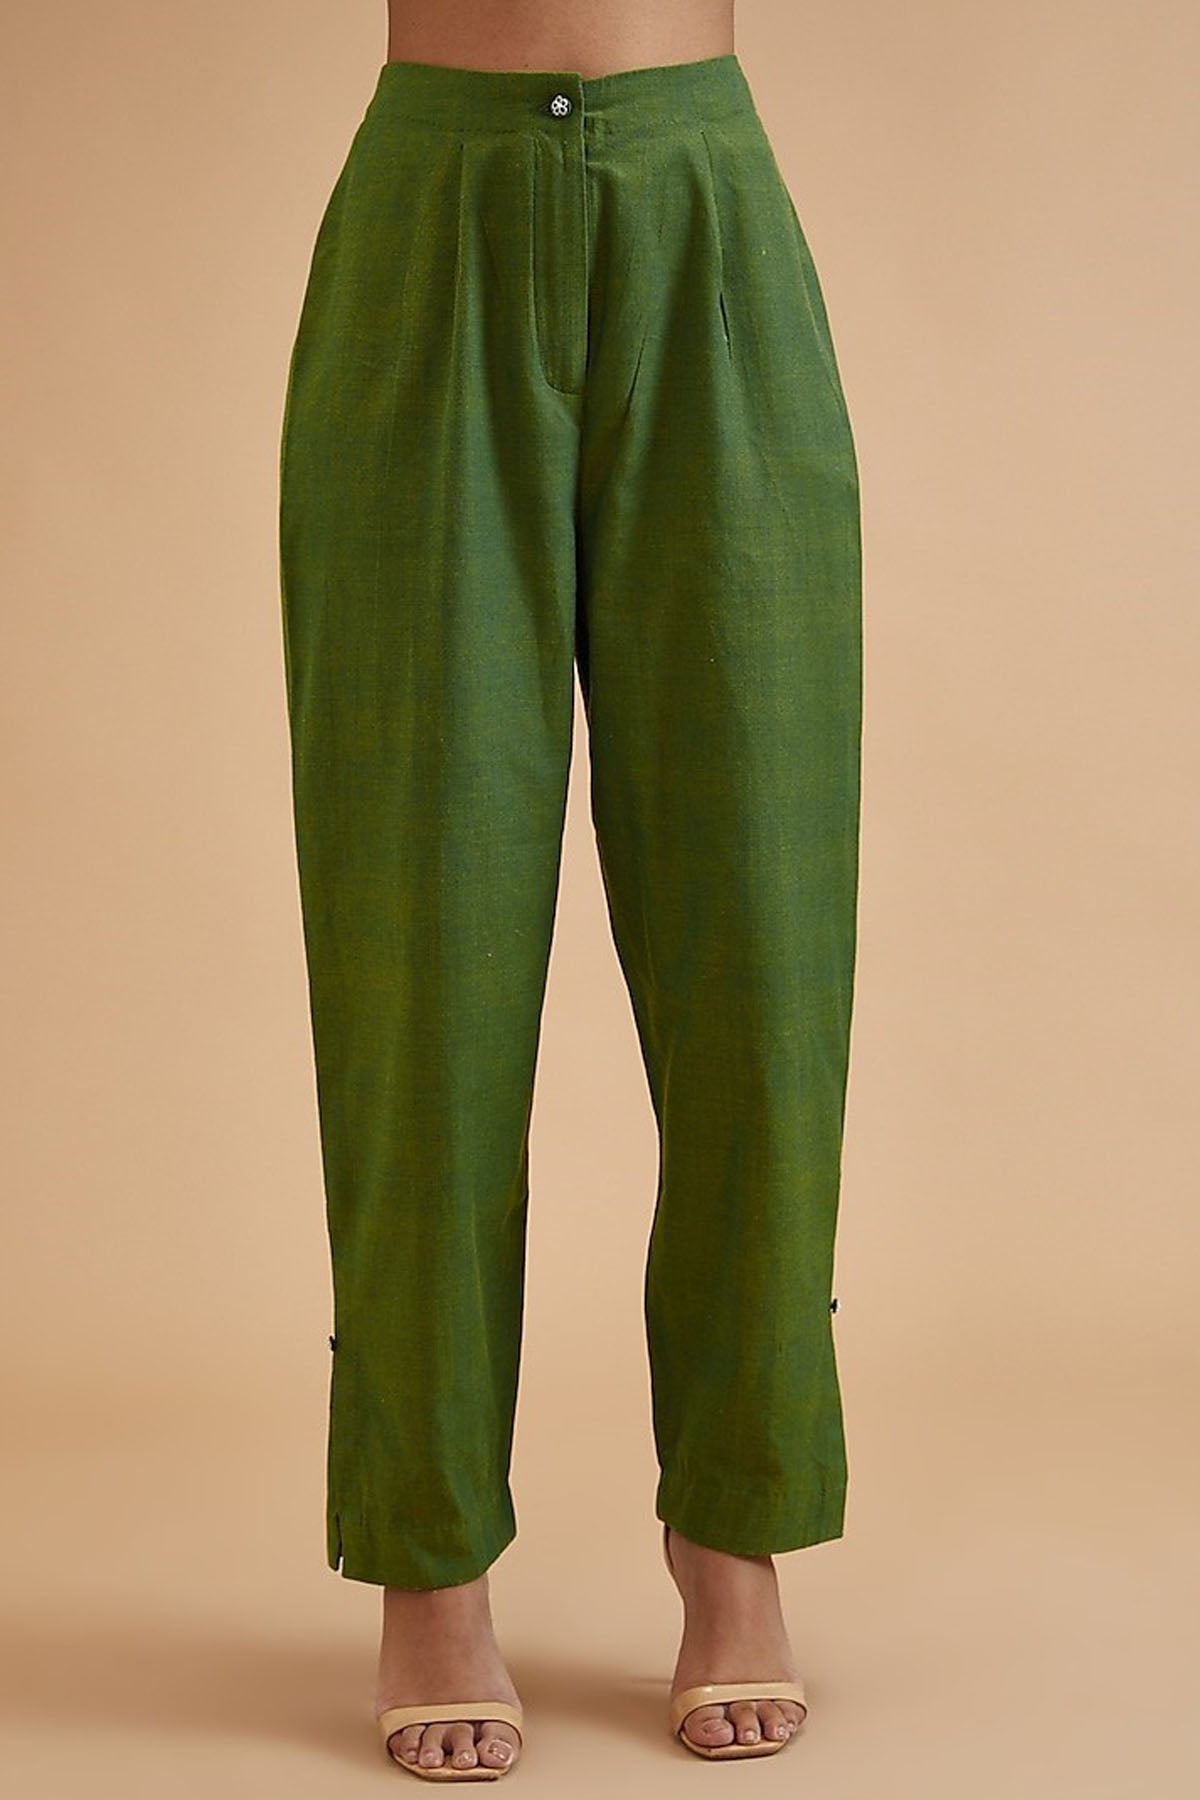 Basil Green Narrow Bottom Pants